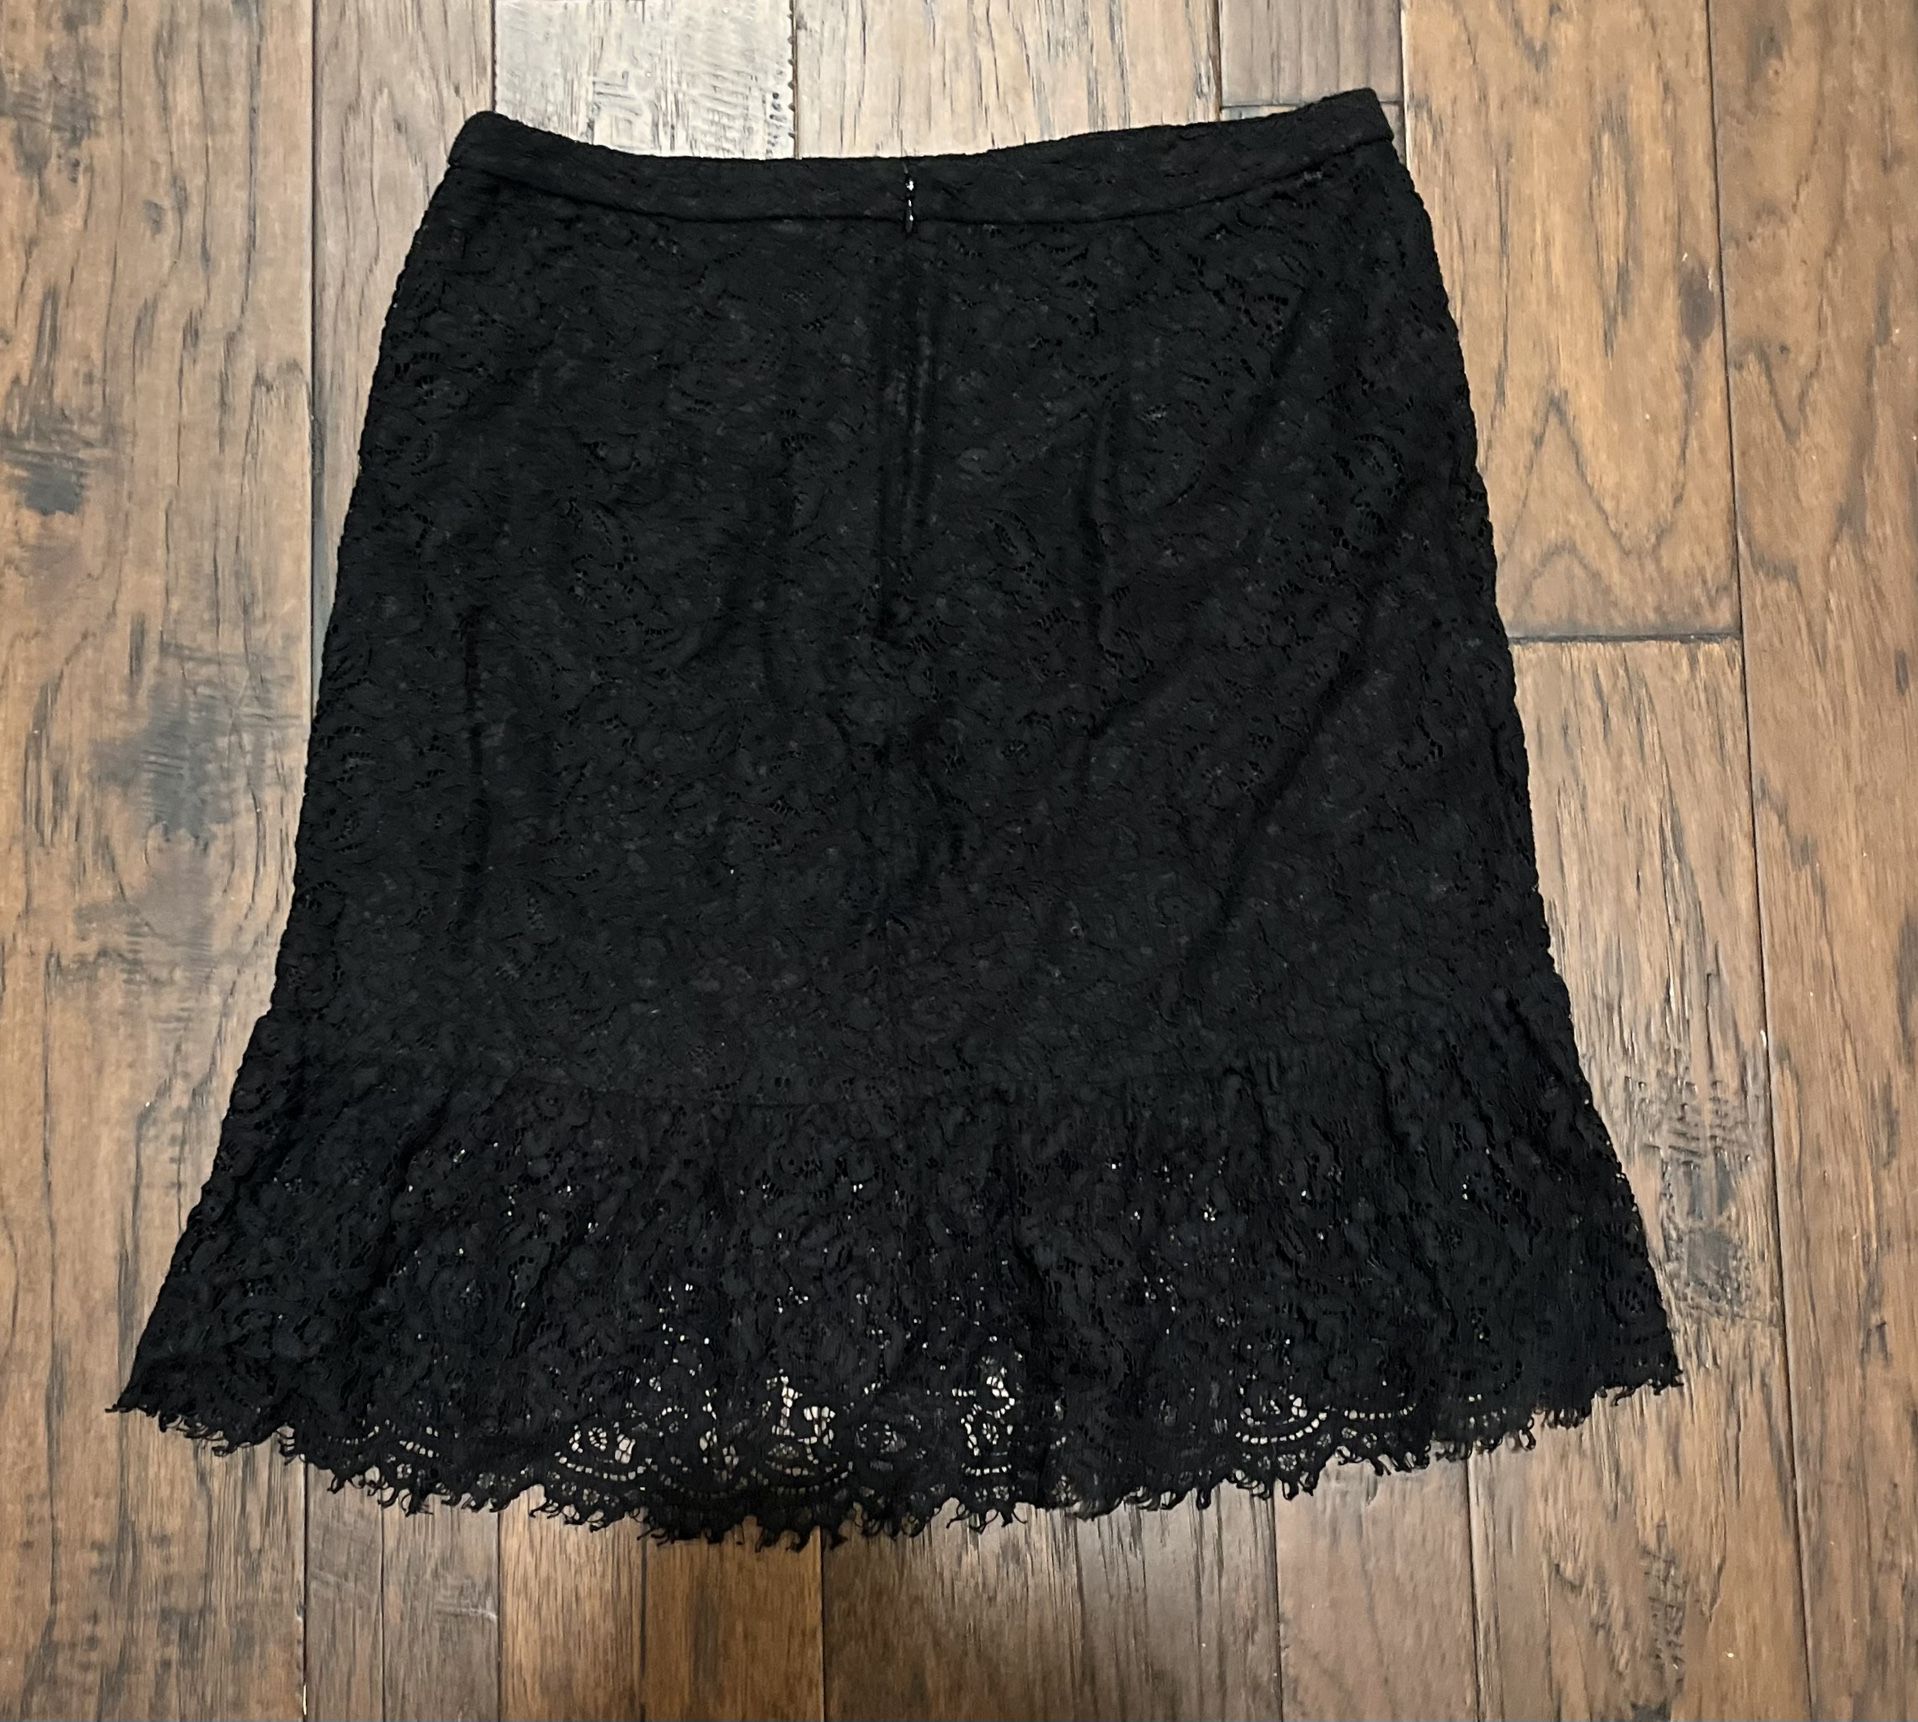 Black Lace Skirt From Banana Republic. SZ 10.